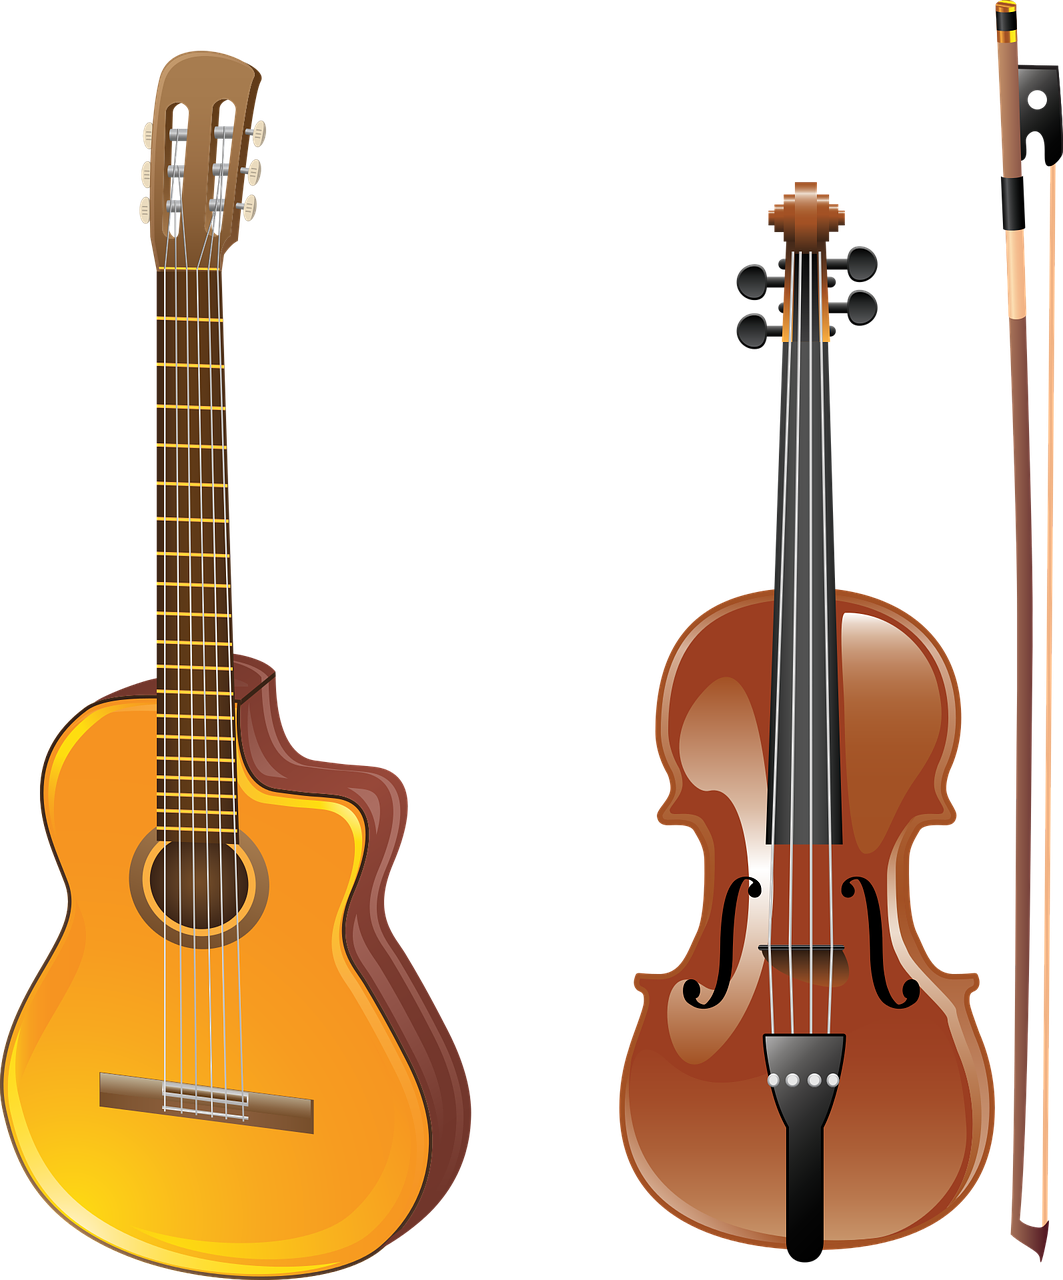 Guitarand Violin Comparison PNG image